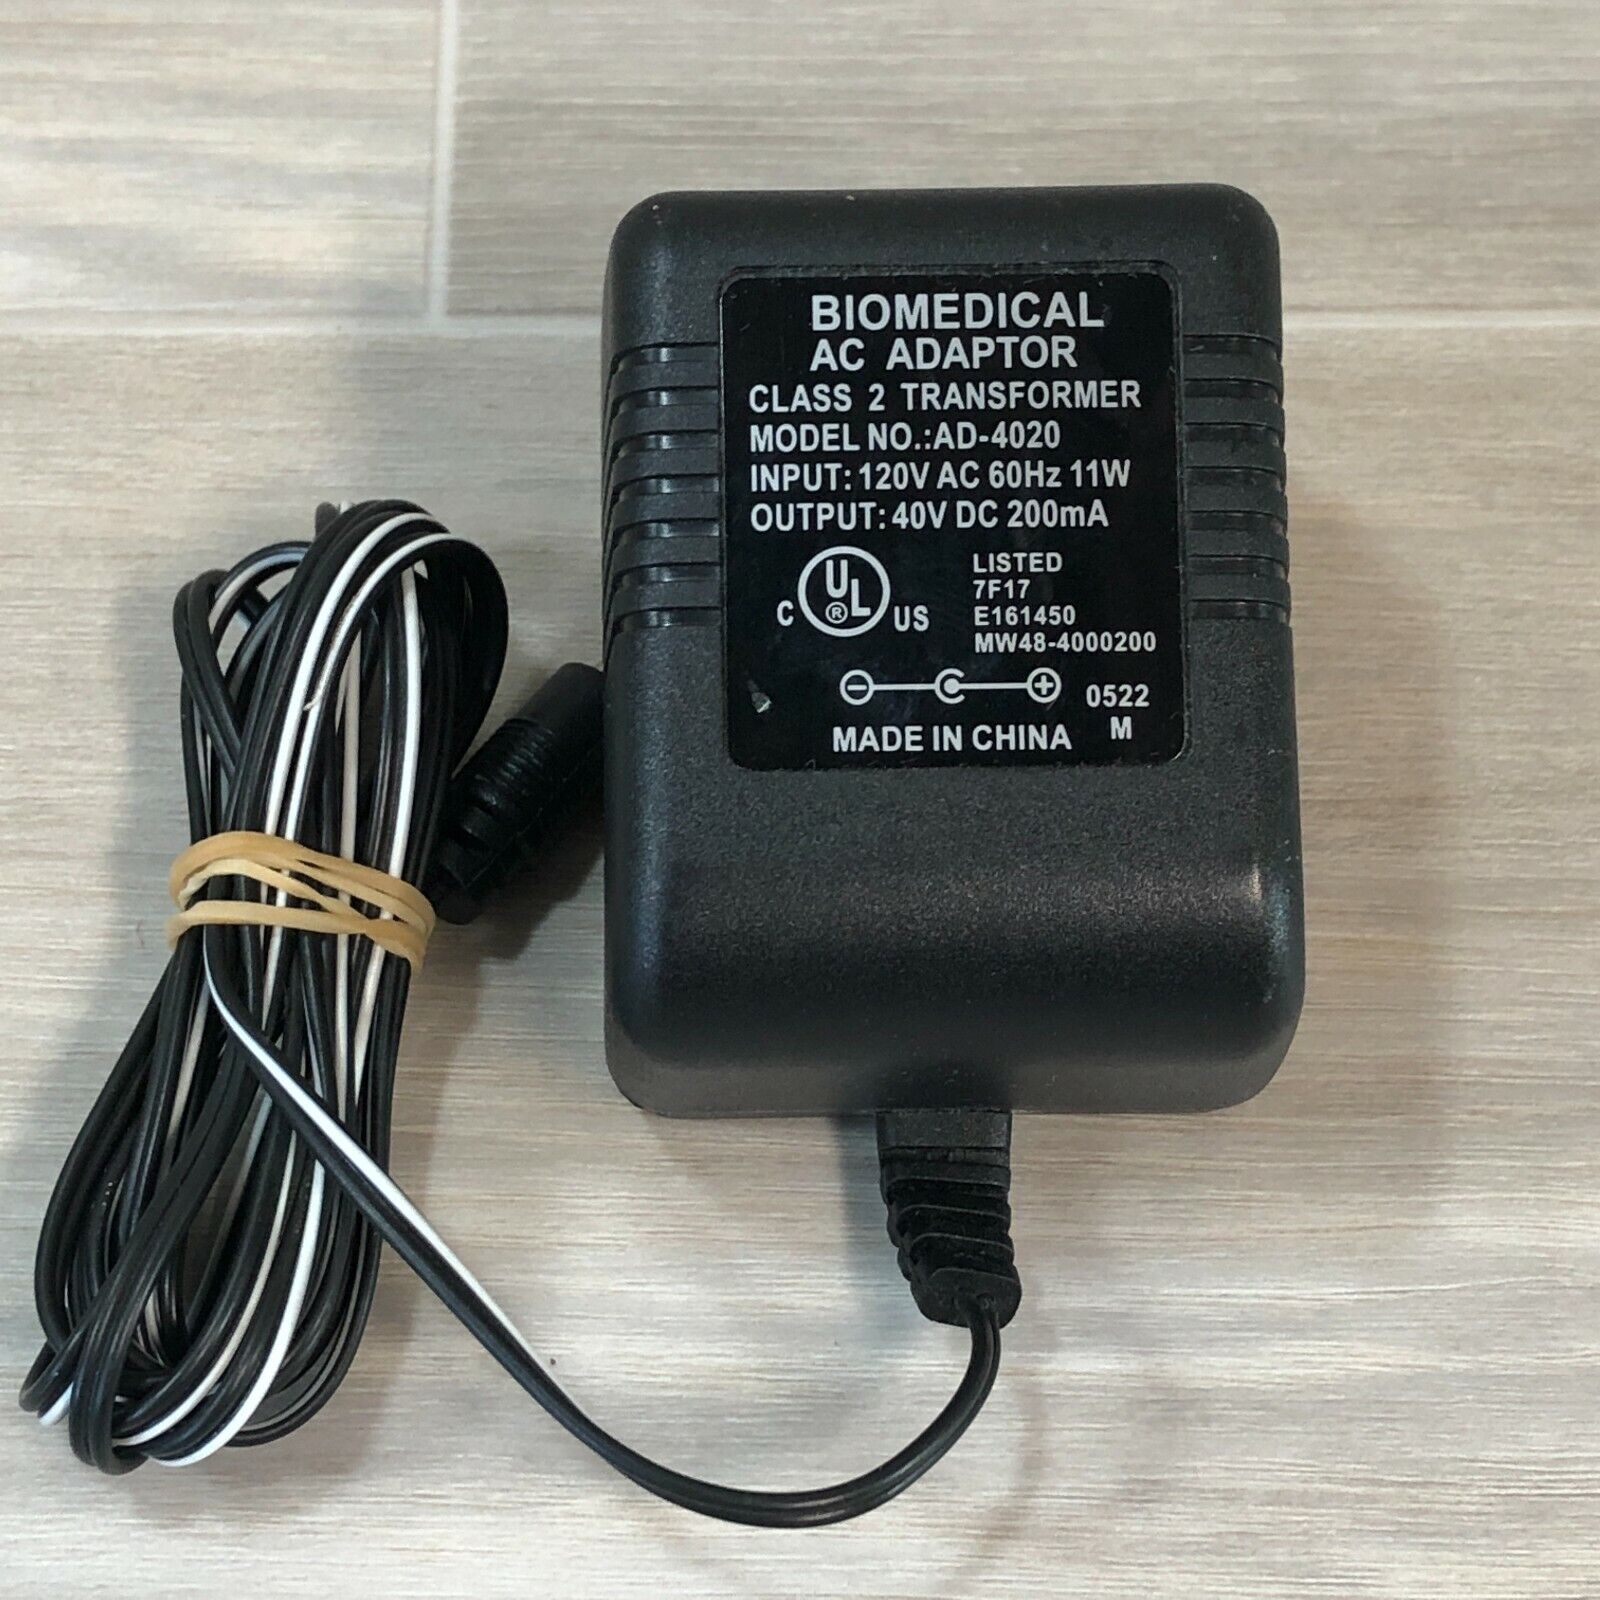 *Brand NEW*40VDC 200mA Biomedical AC Adaptor AD-4020 AC DC ADAPTER POWER SUPPLY